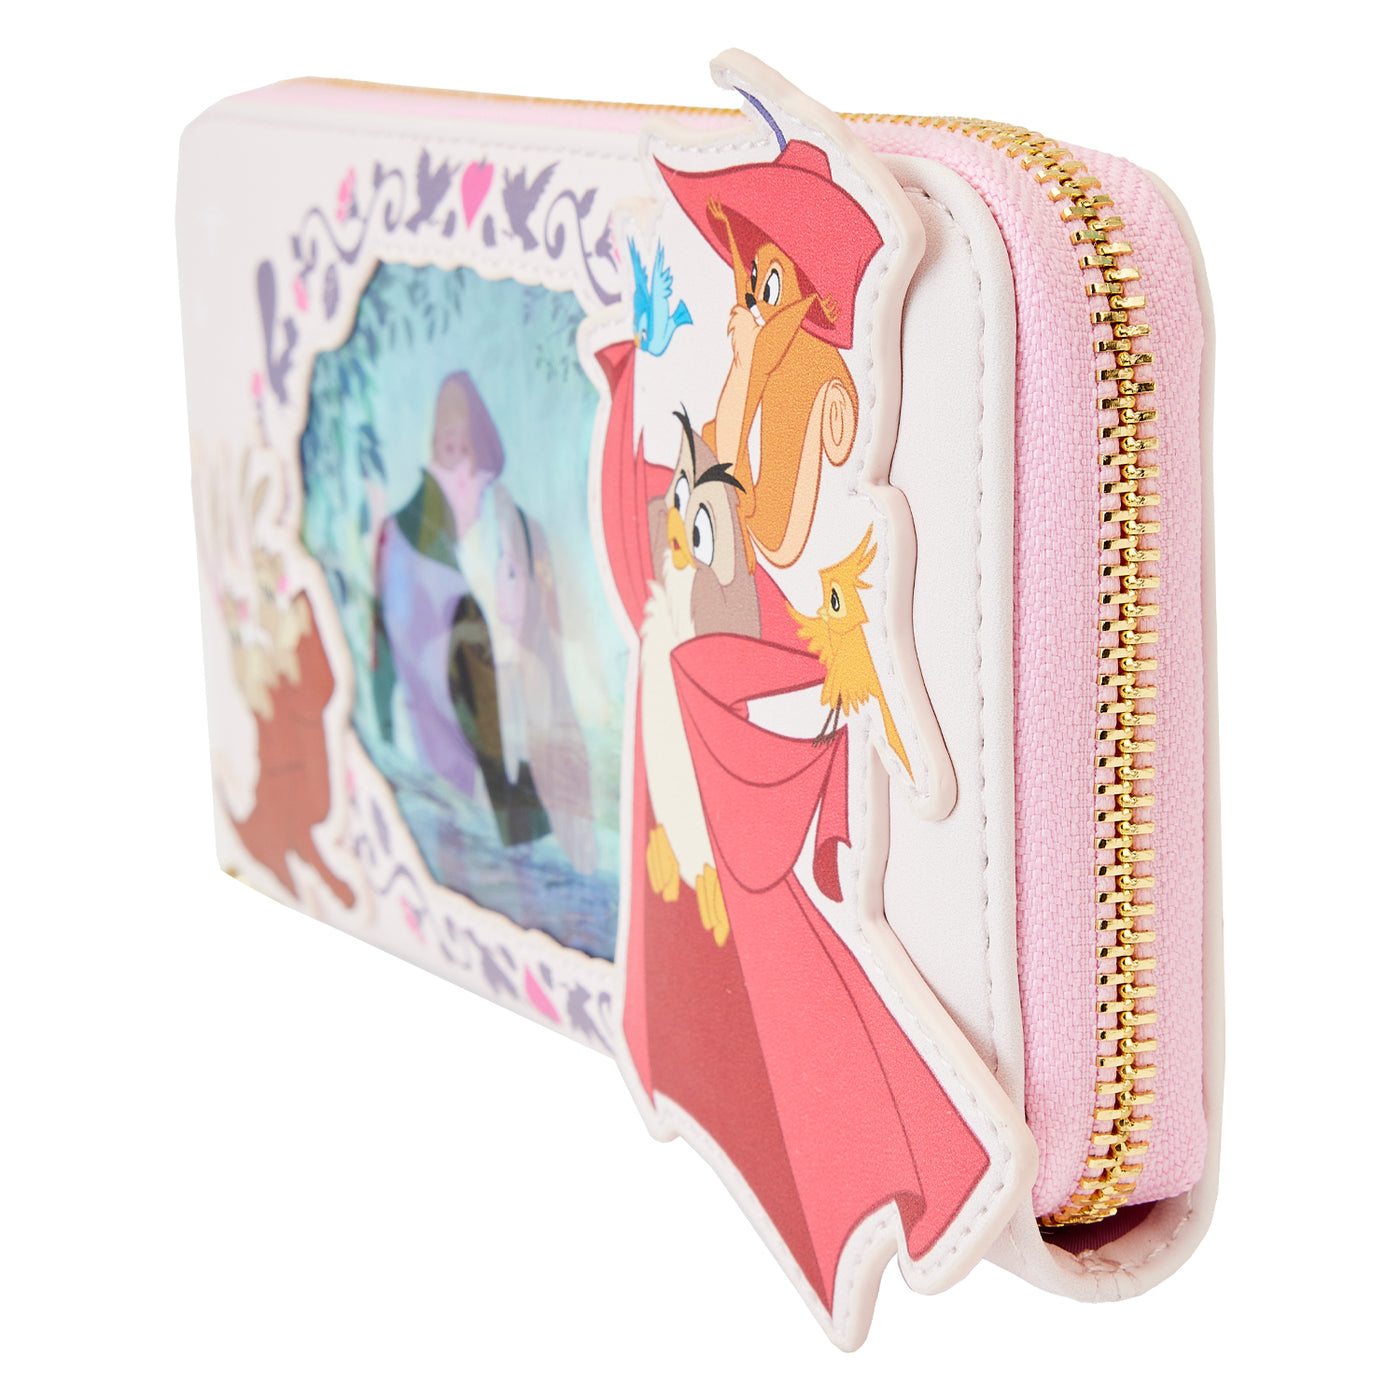 Loungefly Disney Princess Aurora Sleeping Beauty Zip Wallet